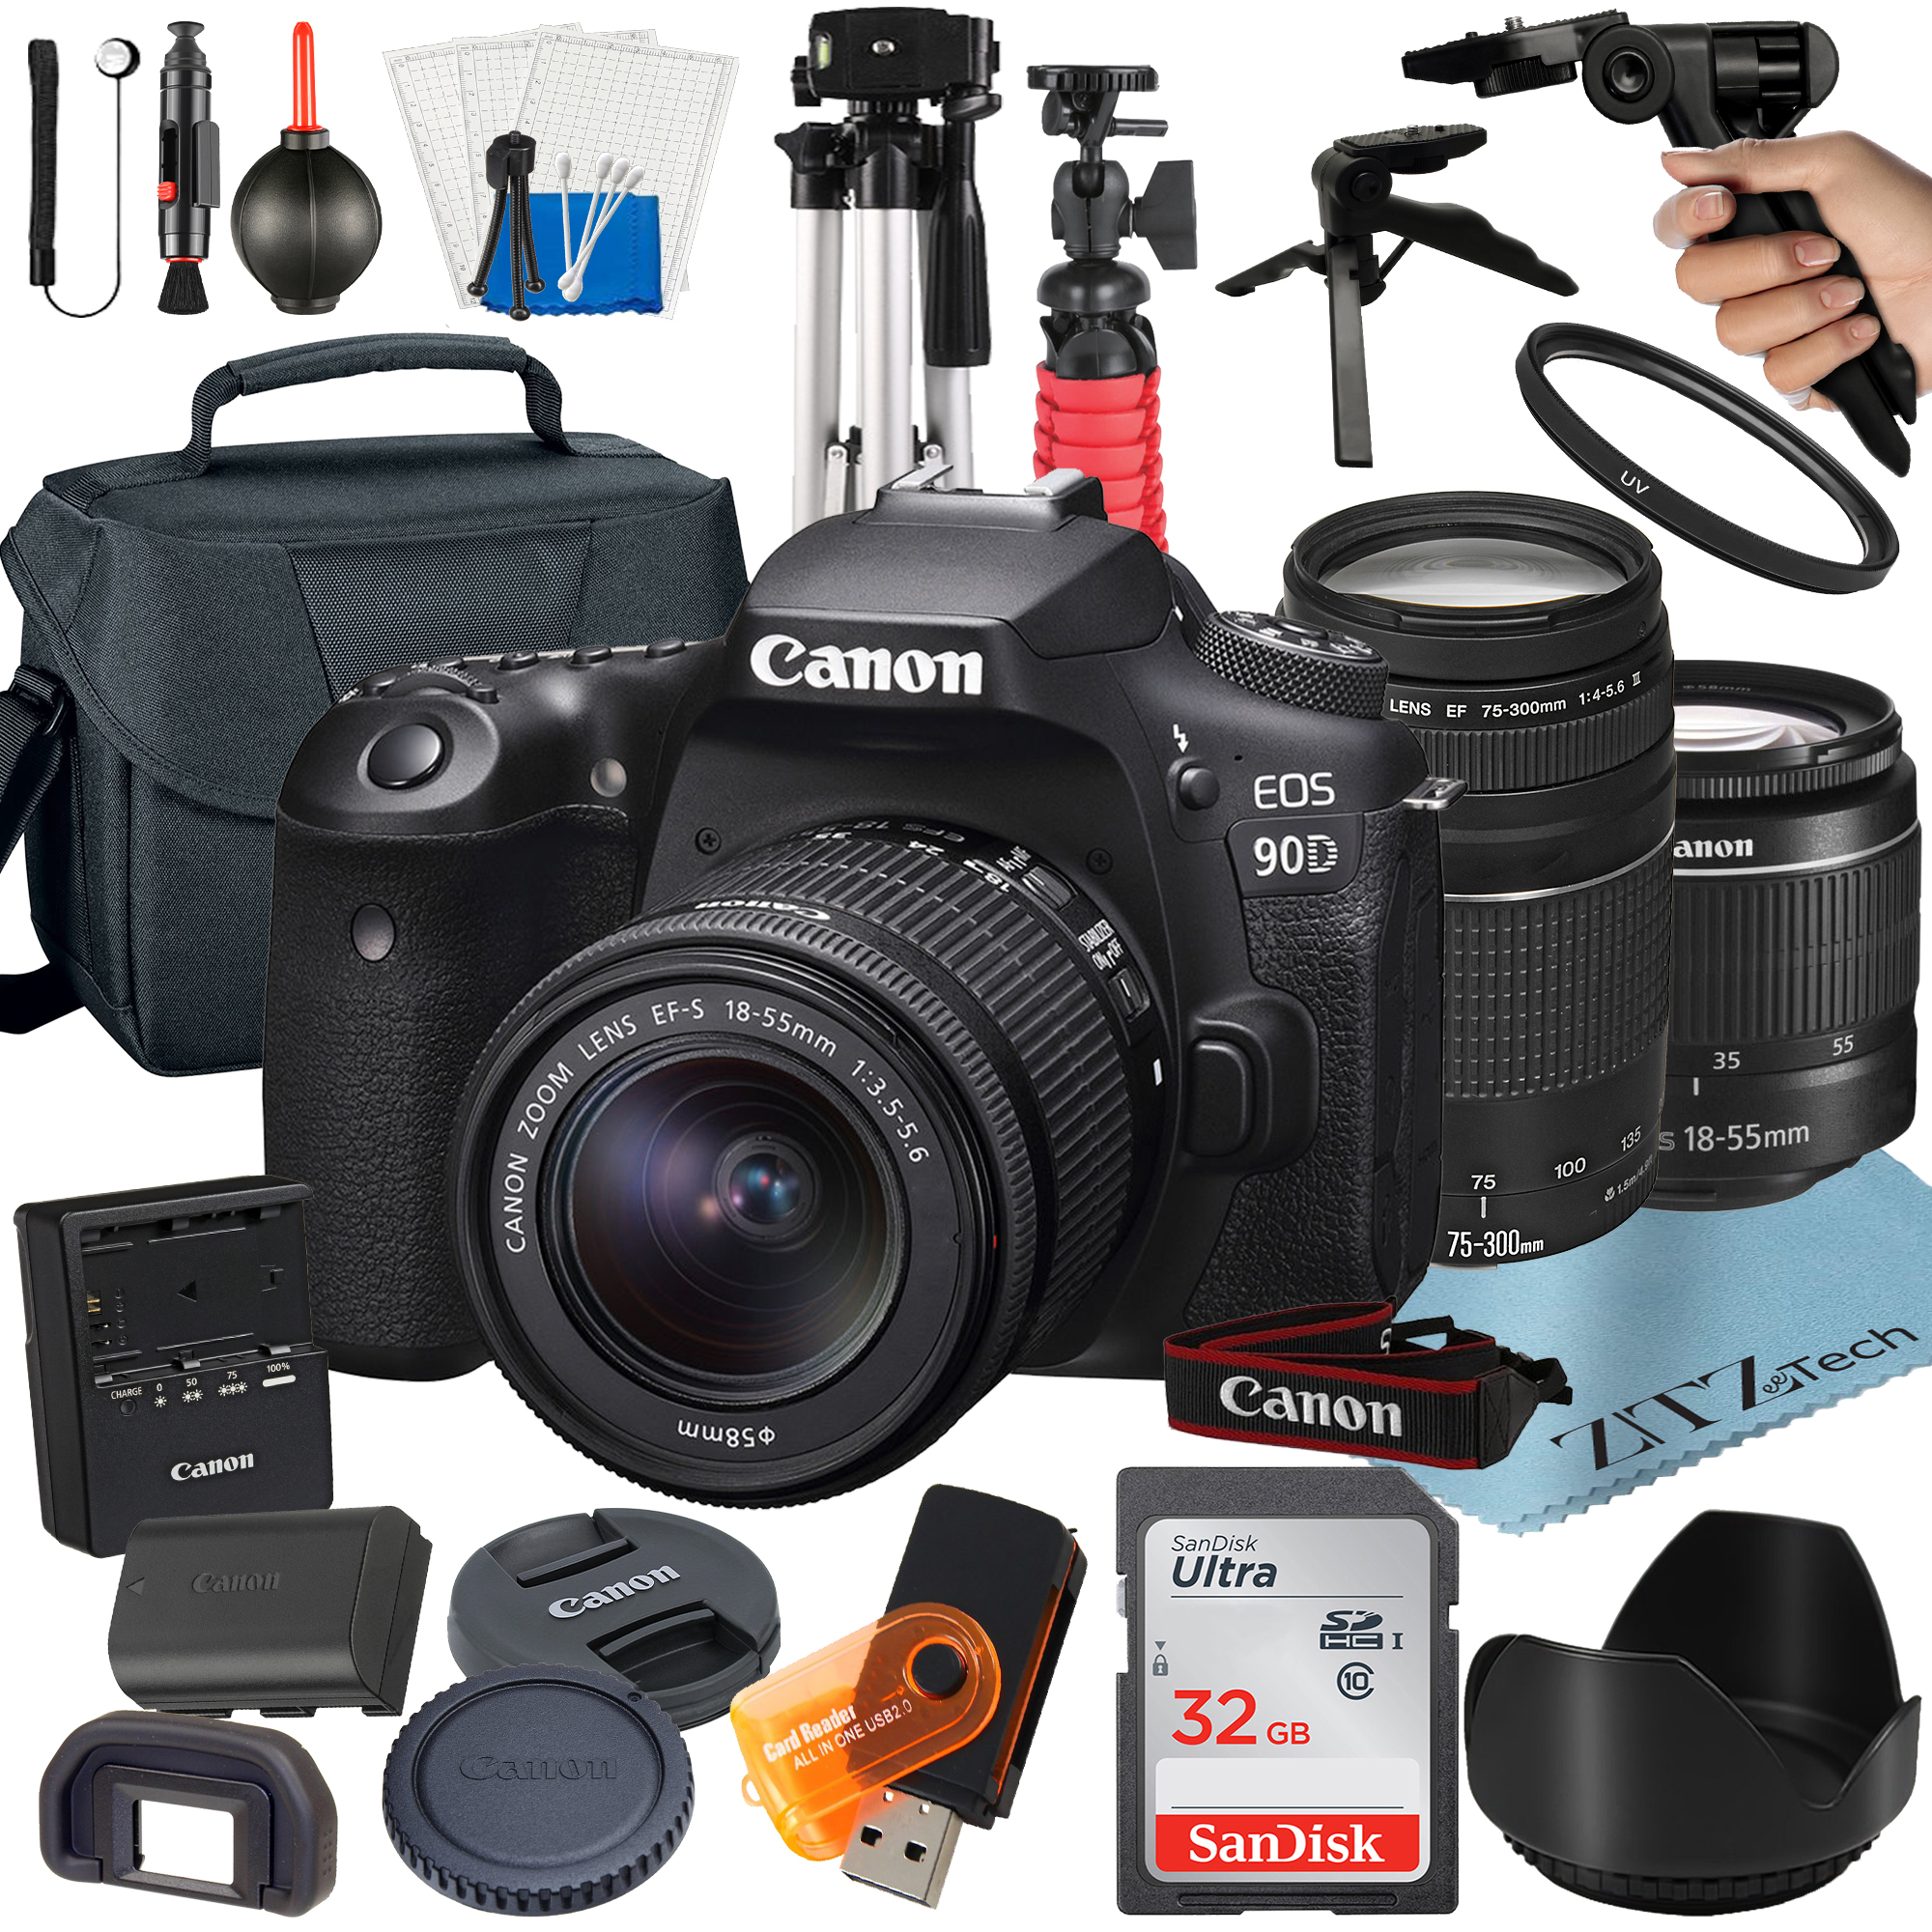 Canon EOS 90D DSLR Camera Bundle with 18-55mm + 75-300mm Lens + 32GB SanDisk Card + Case + Tripod + ZeeTech Accessory